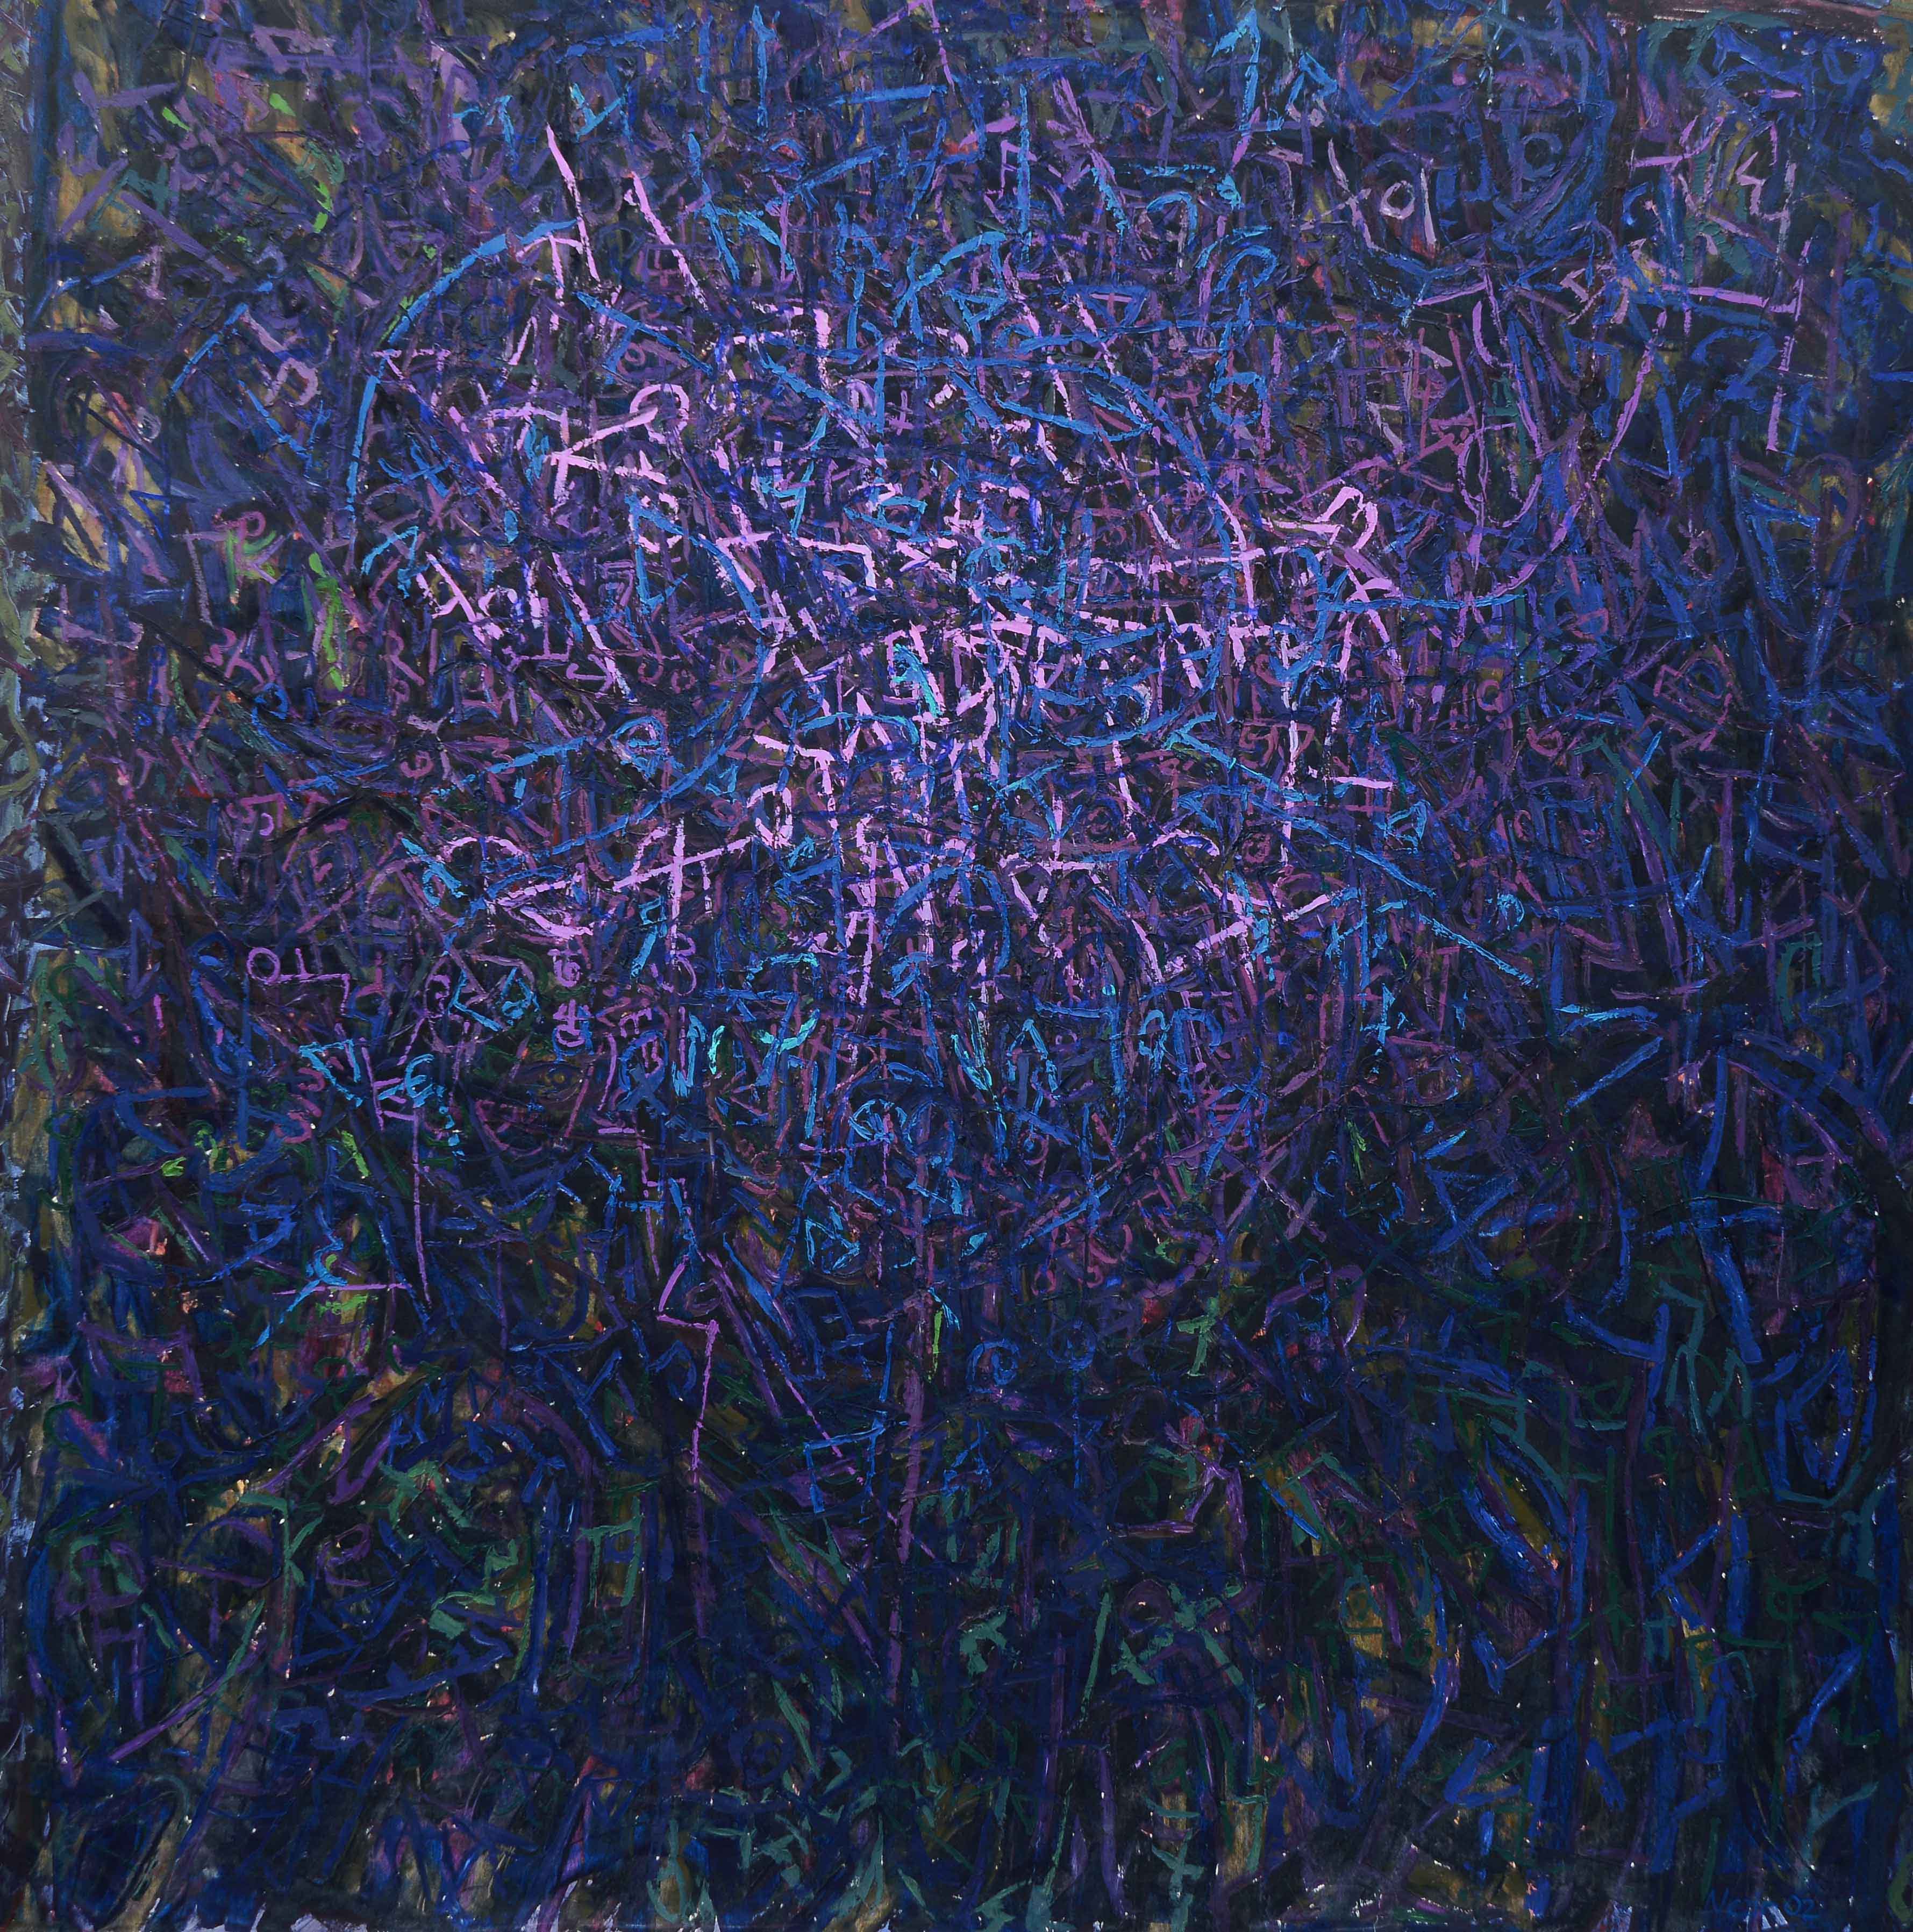 İsimsiz- Untitled, Tuval üzerine yağlıboya- Oil on canvas, 200x200 cm